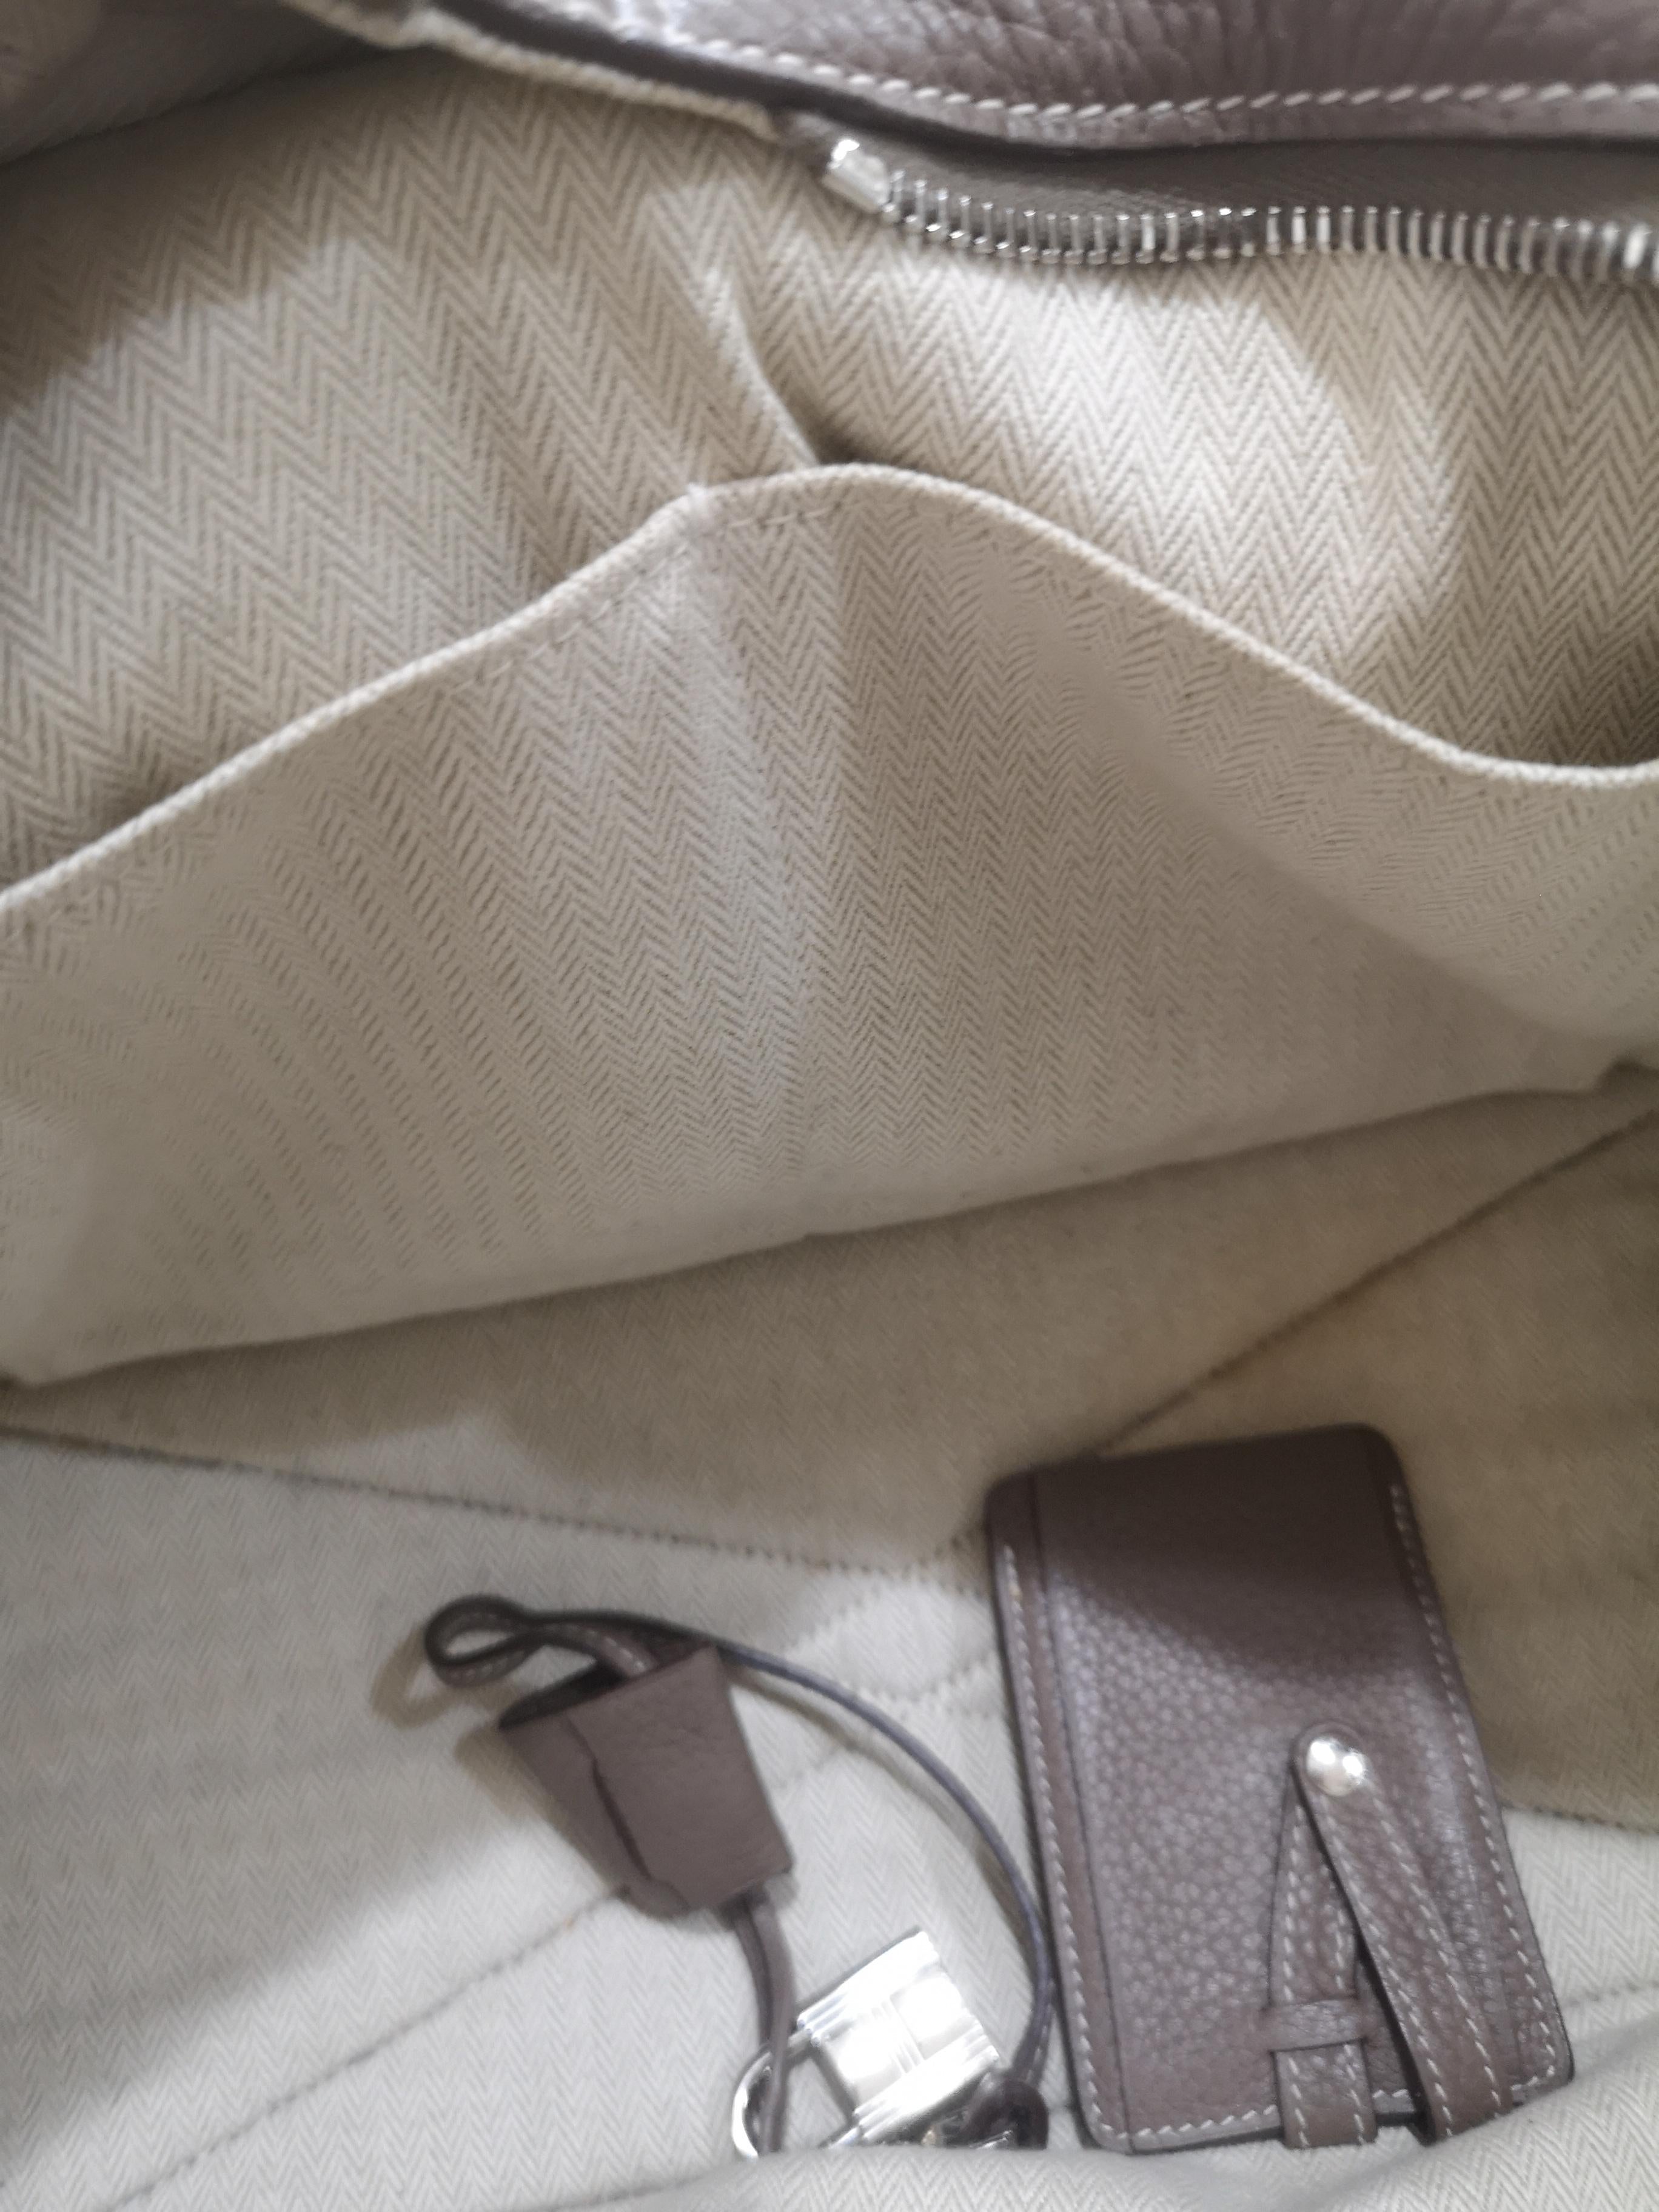 Hermès dove grey shoulder bag
Measurements: 23 x 38 cm
17 depth